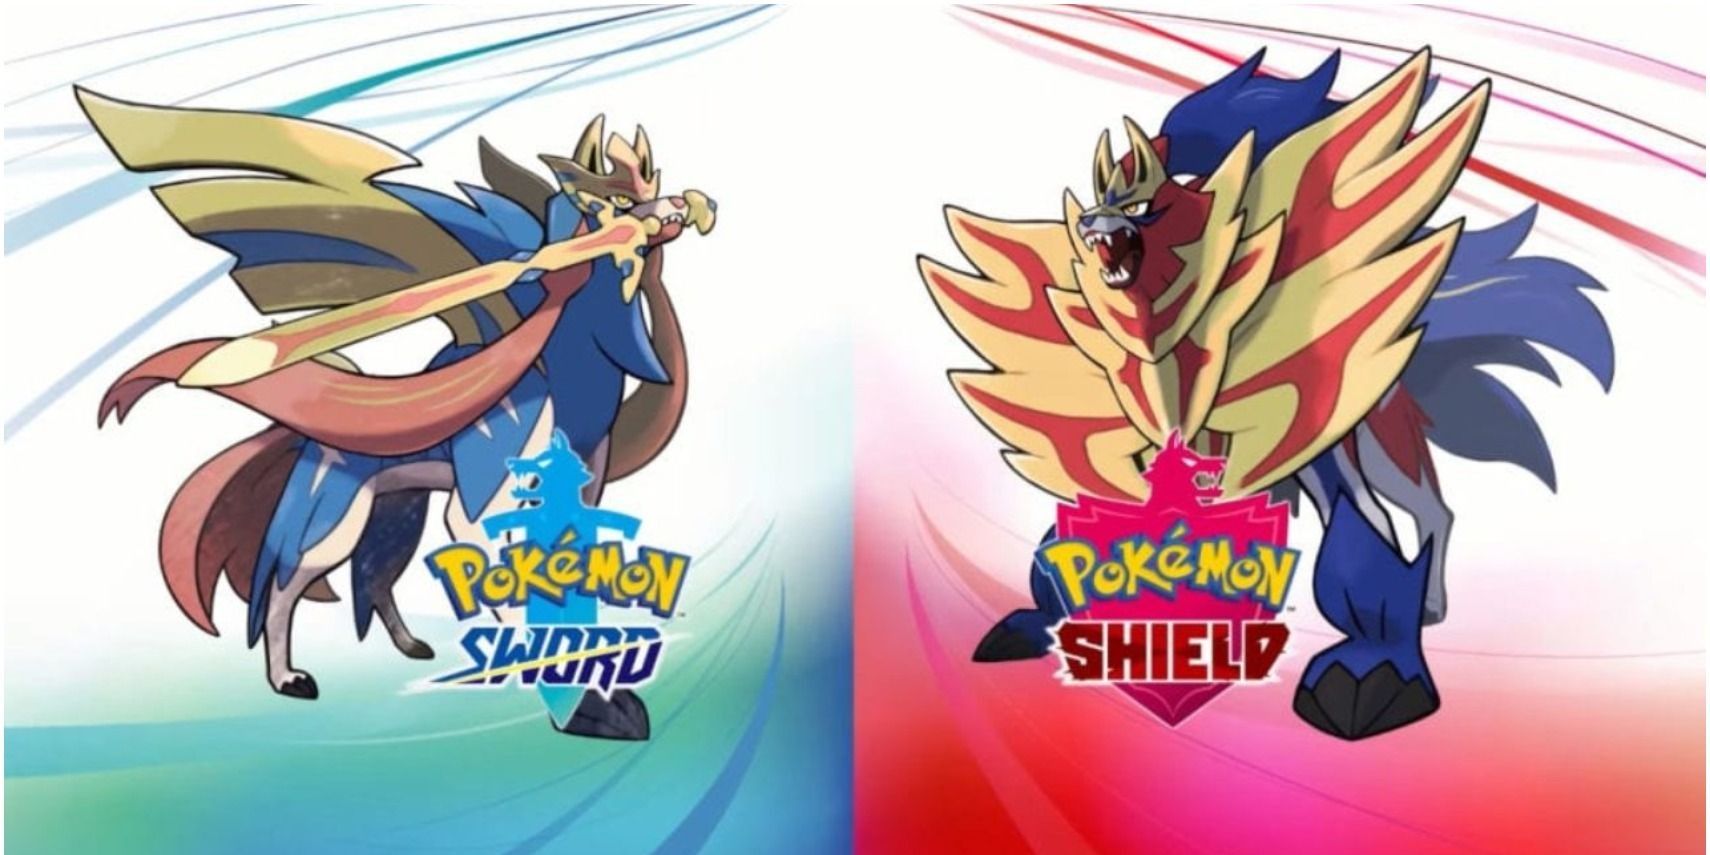 Official artwork for Pokemon Sword and Shield mascots, Zacian and Zamazenta.